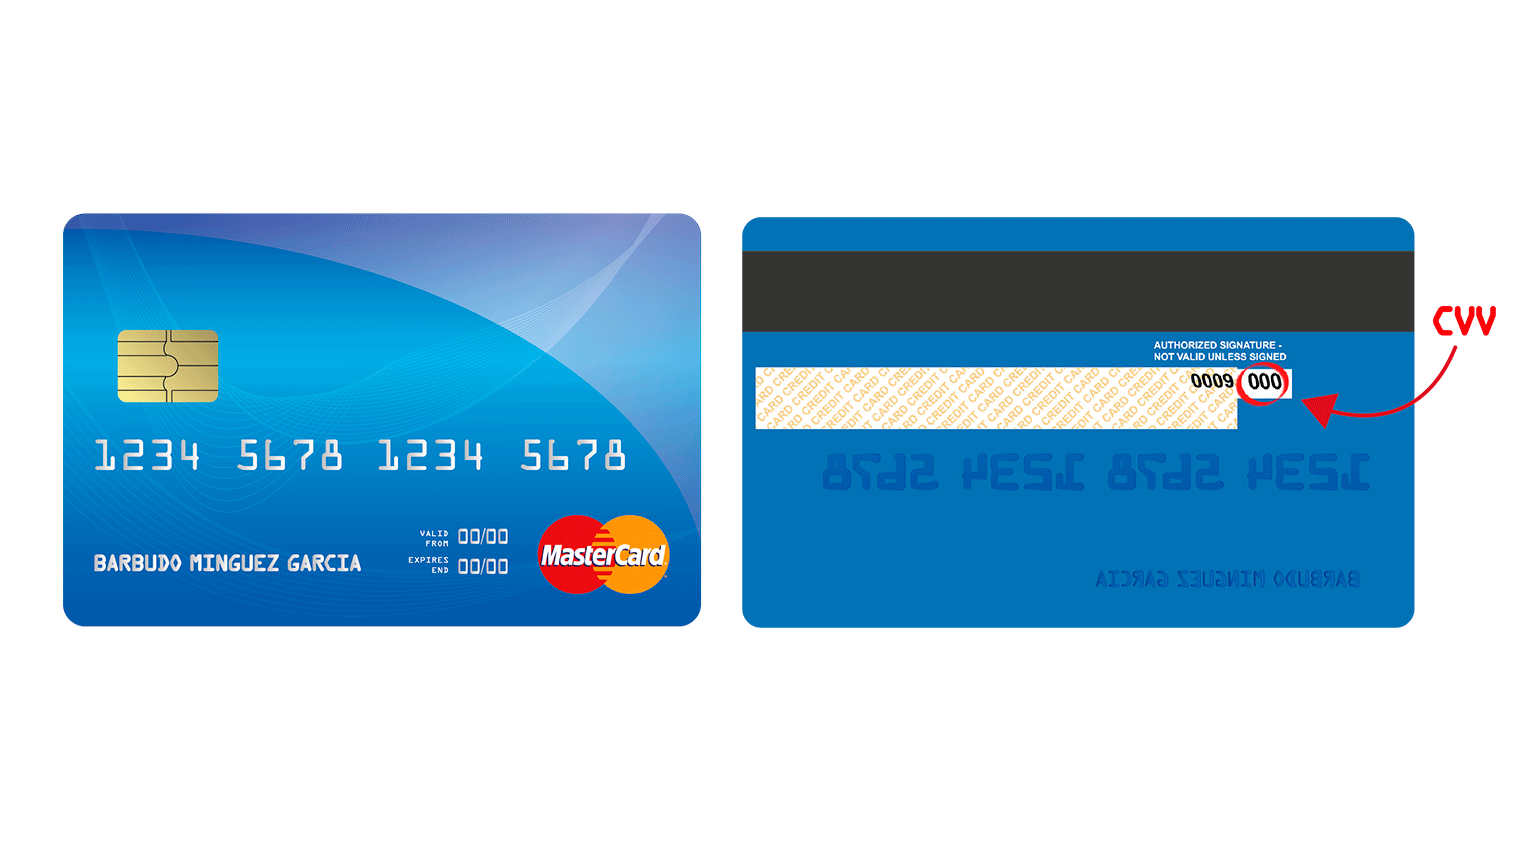 Debit card numbers with cvv